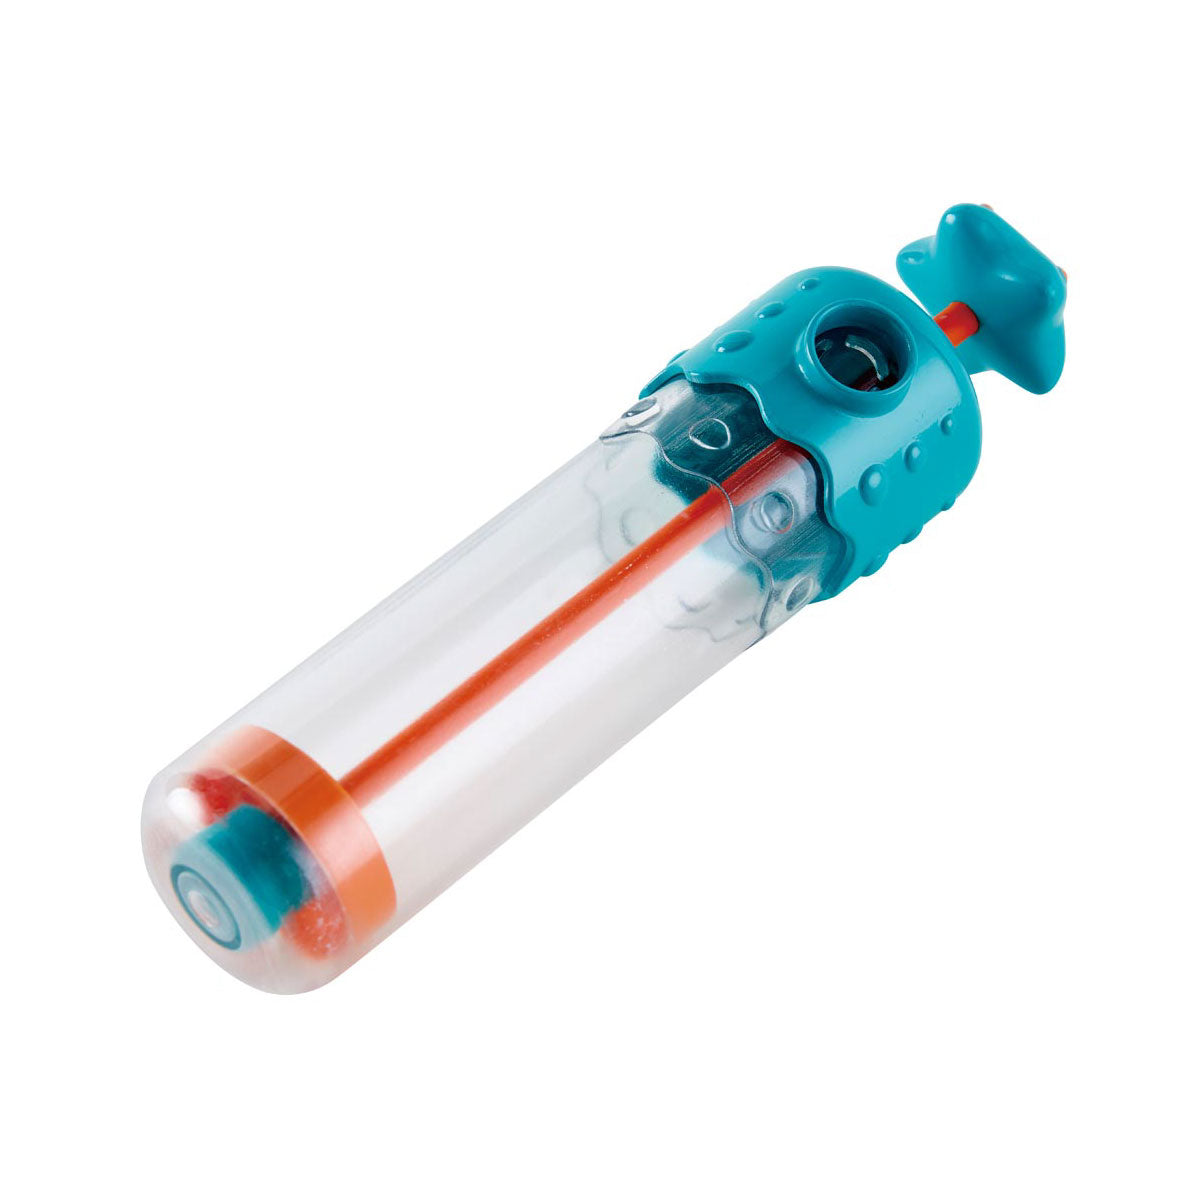 Hape Multi-Spout Sprayer Water Toy